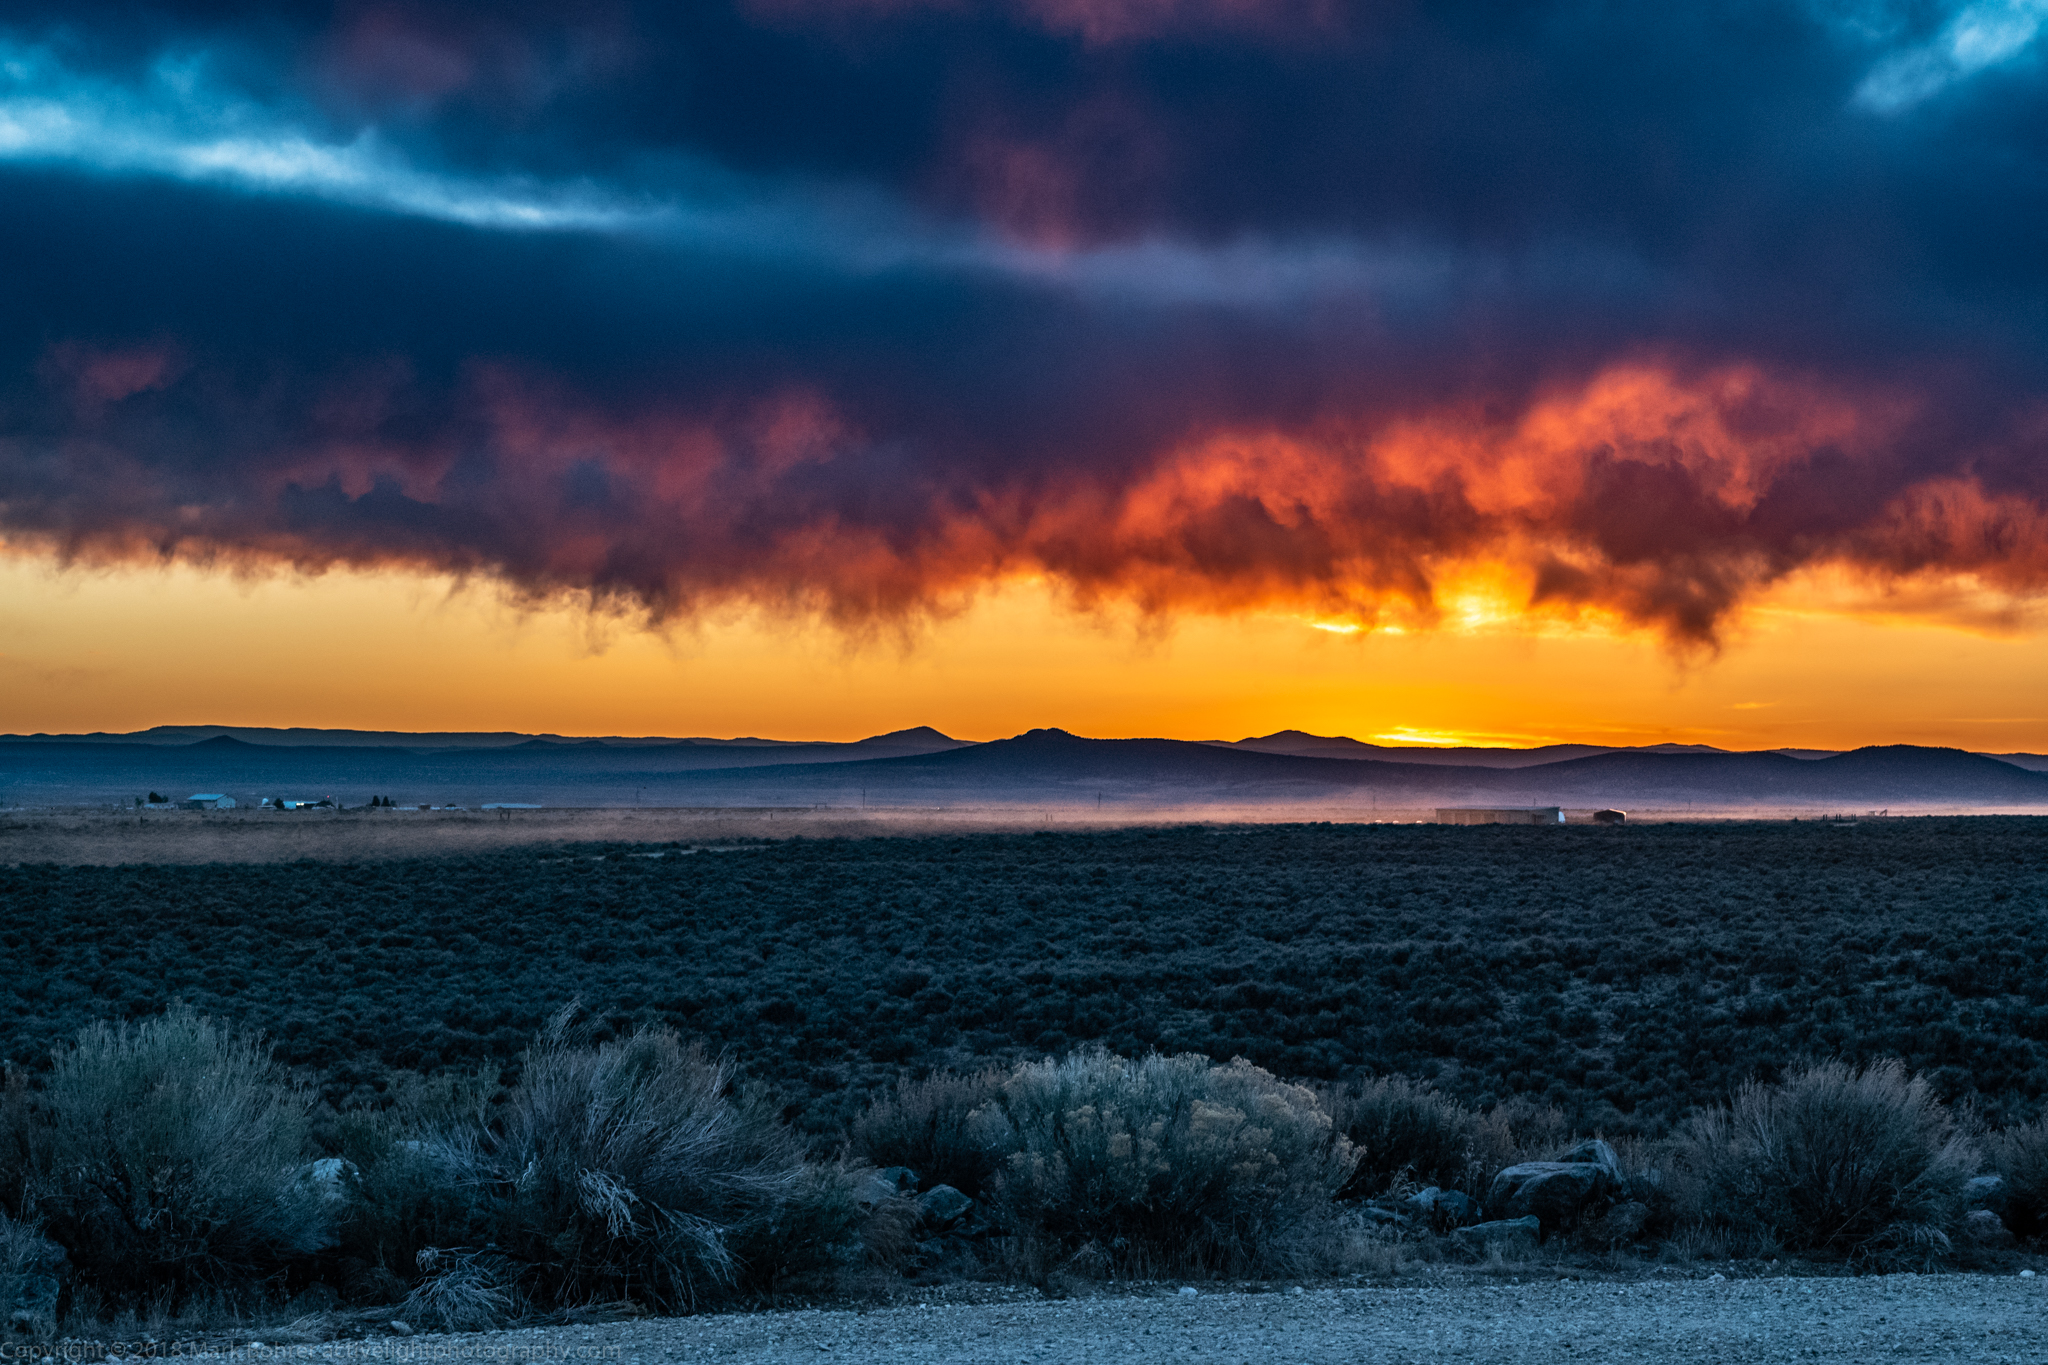 After the sunset, El Prado, New Mexico